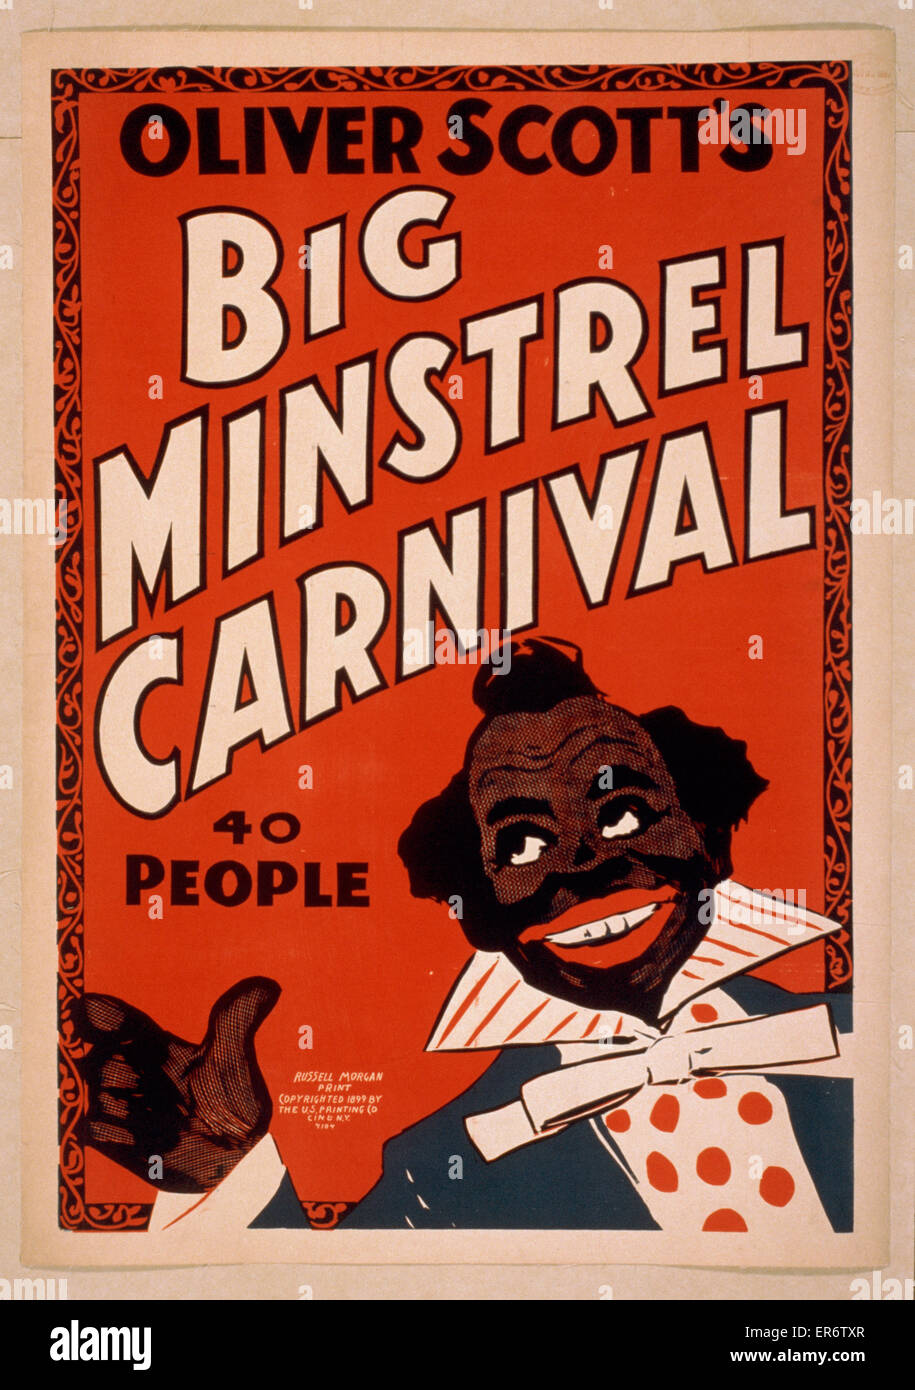 Oliver Scott's Big Minstrel Carnival 40 persone Foto Stock